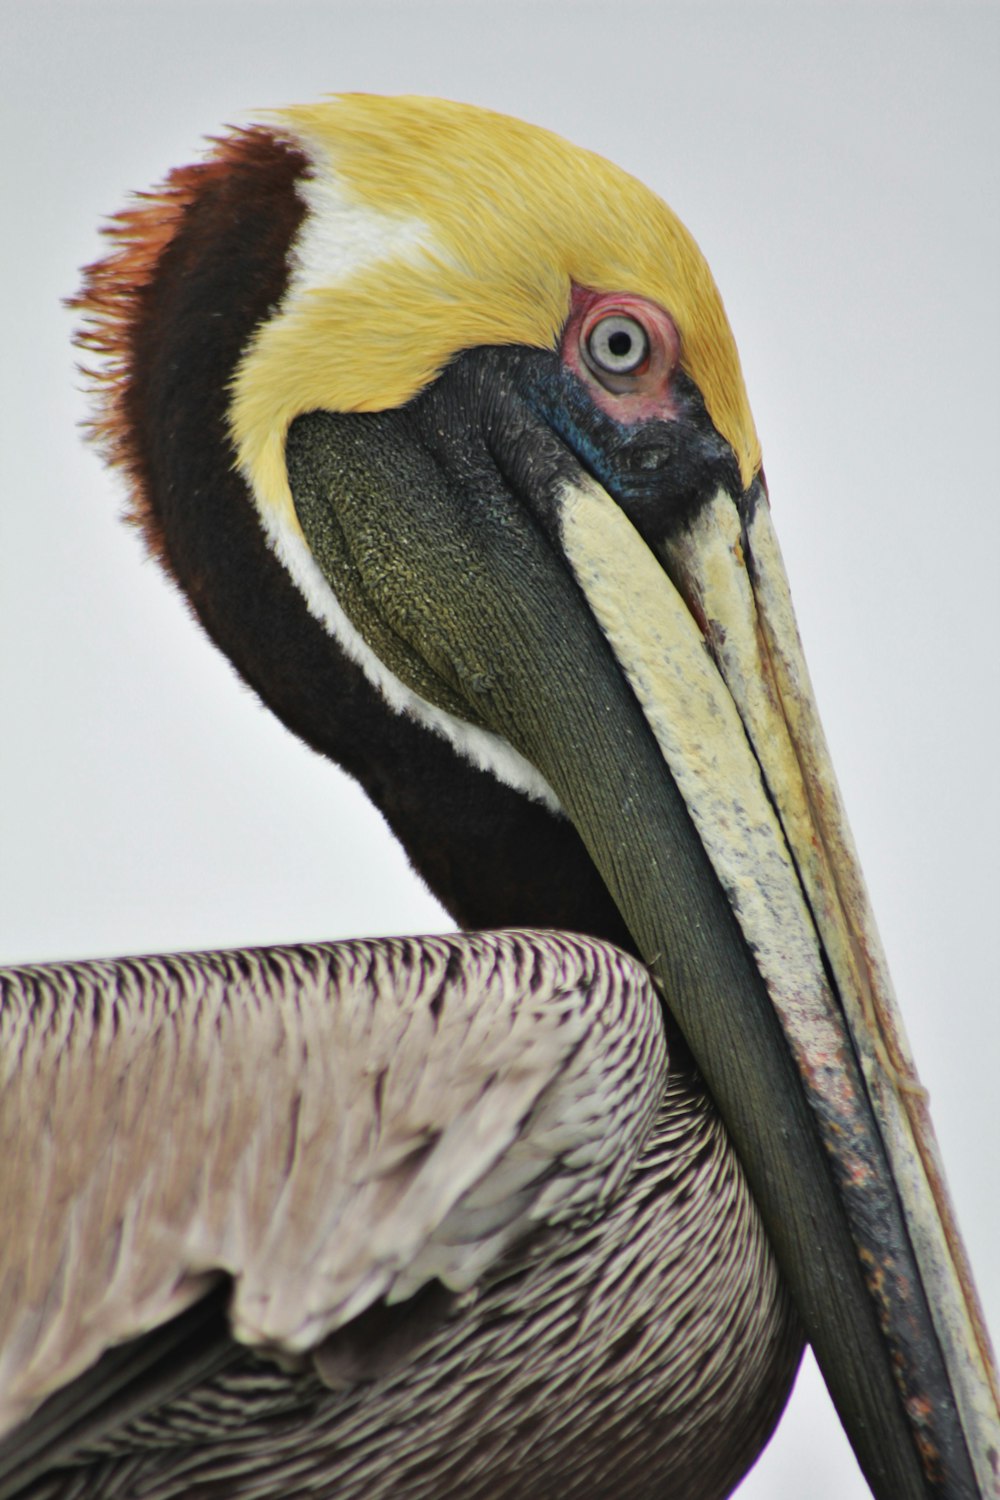 yellow, black, and white toucan